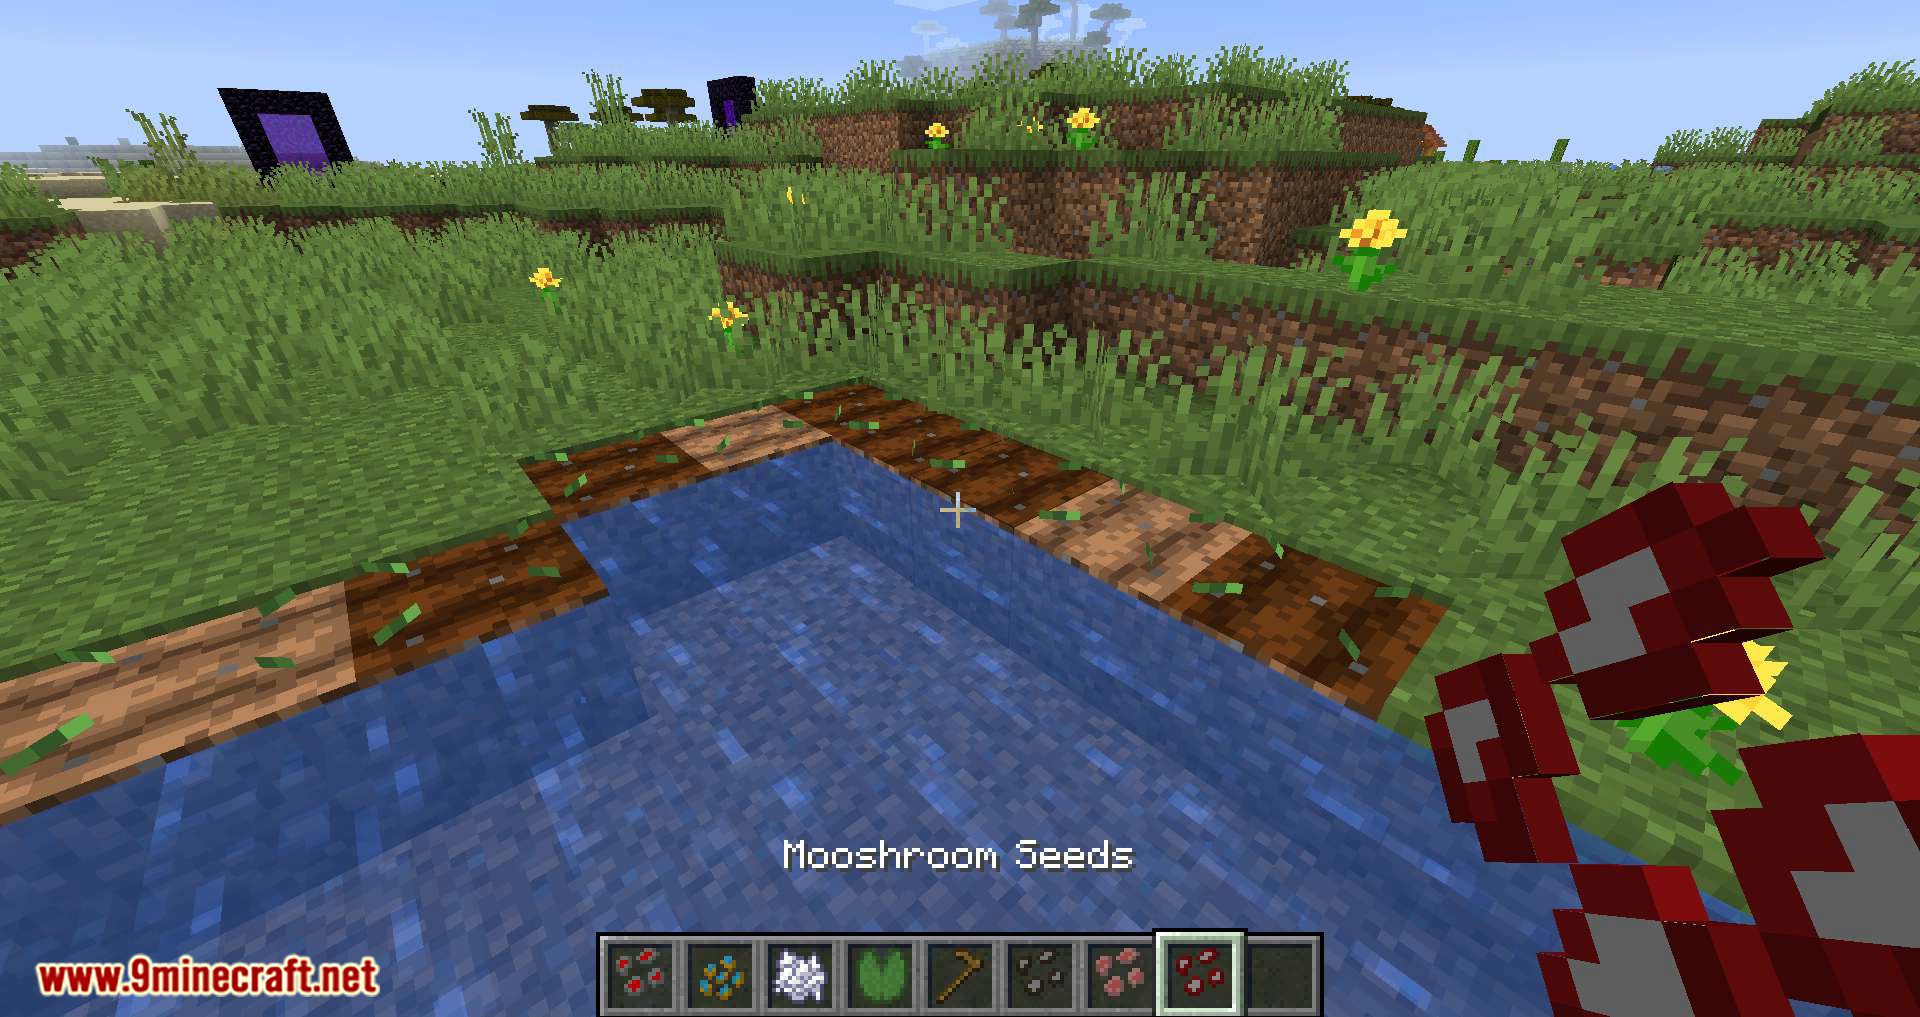 Animal Crops Mod (1.18.2, 1.16.5) - Adding Seeds to Grow Passive Mobs 12